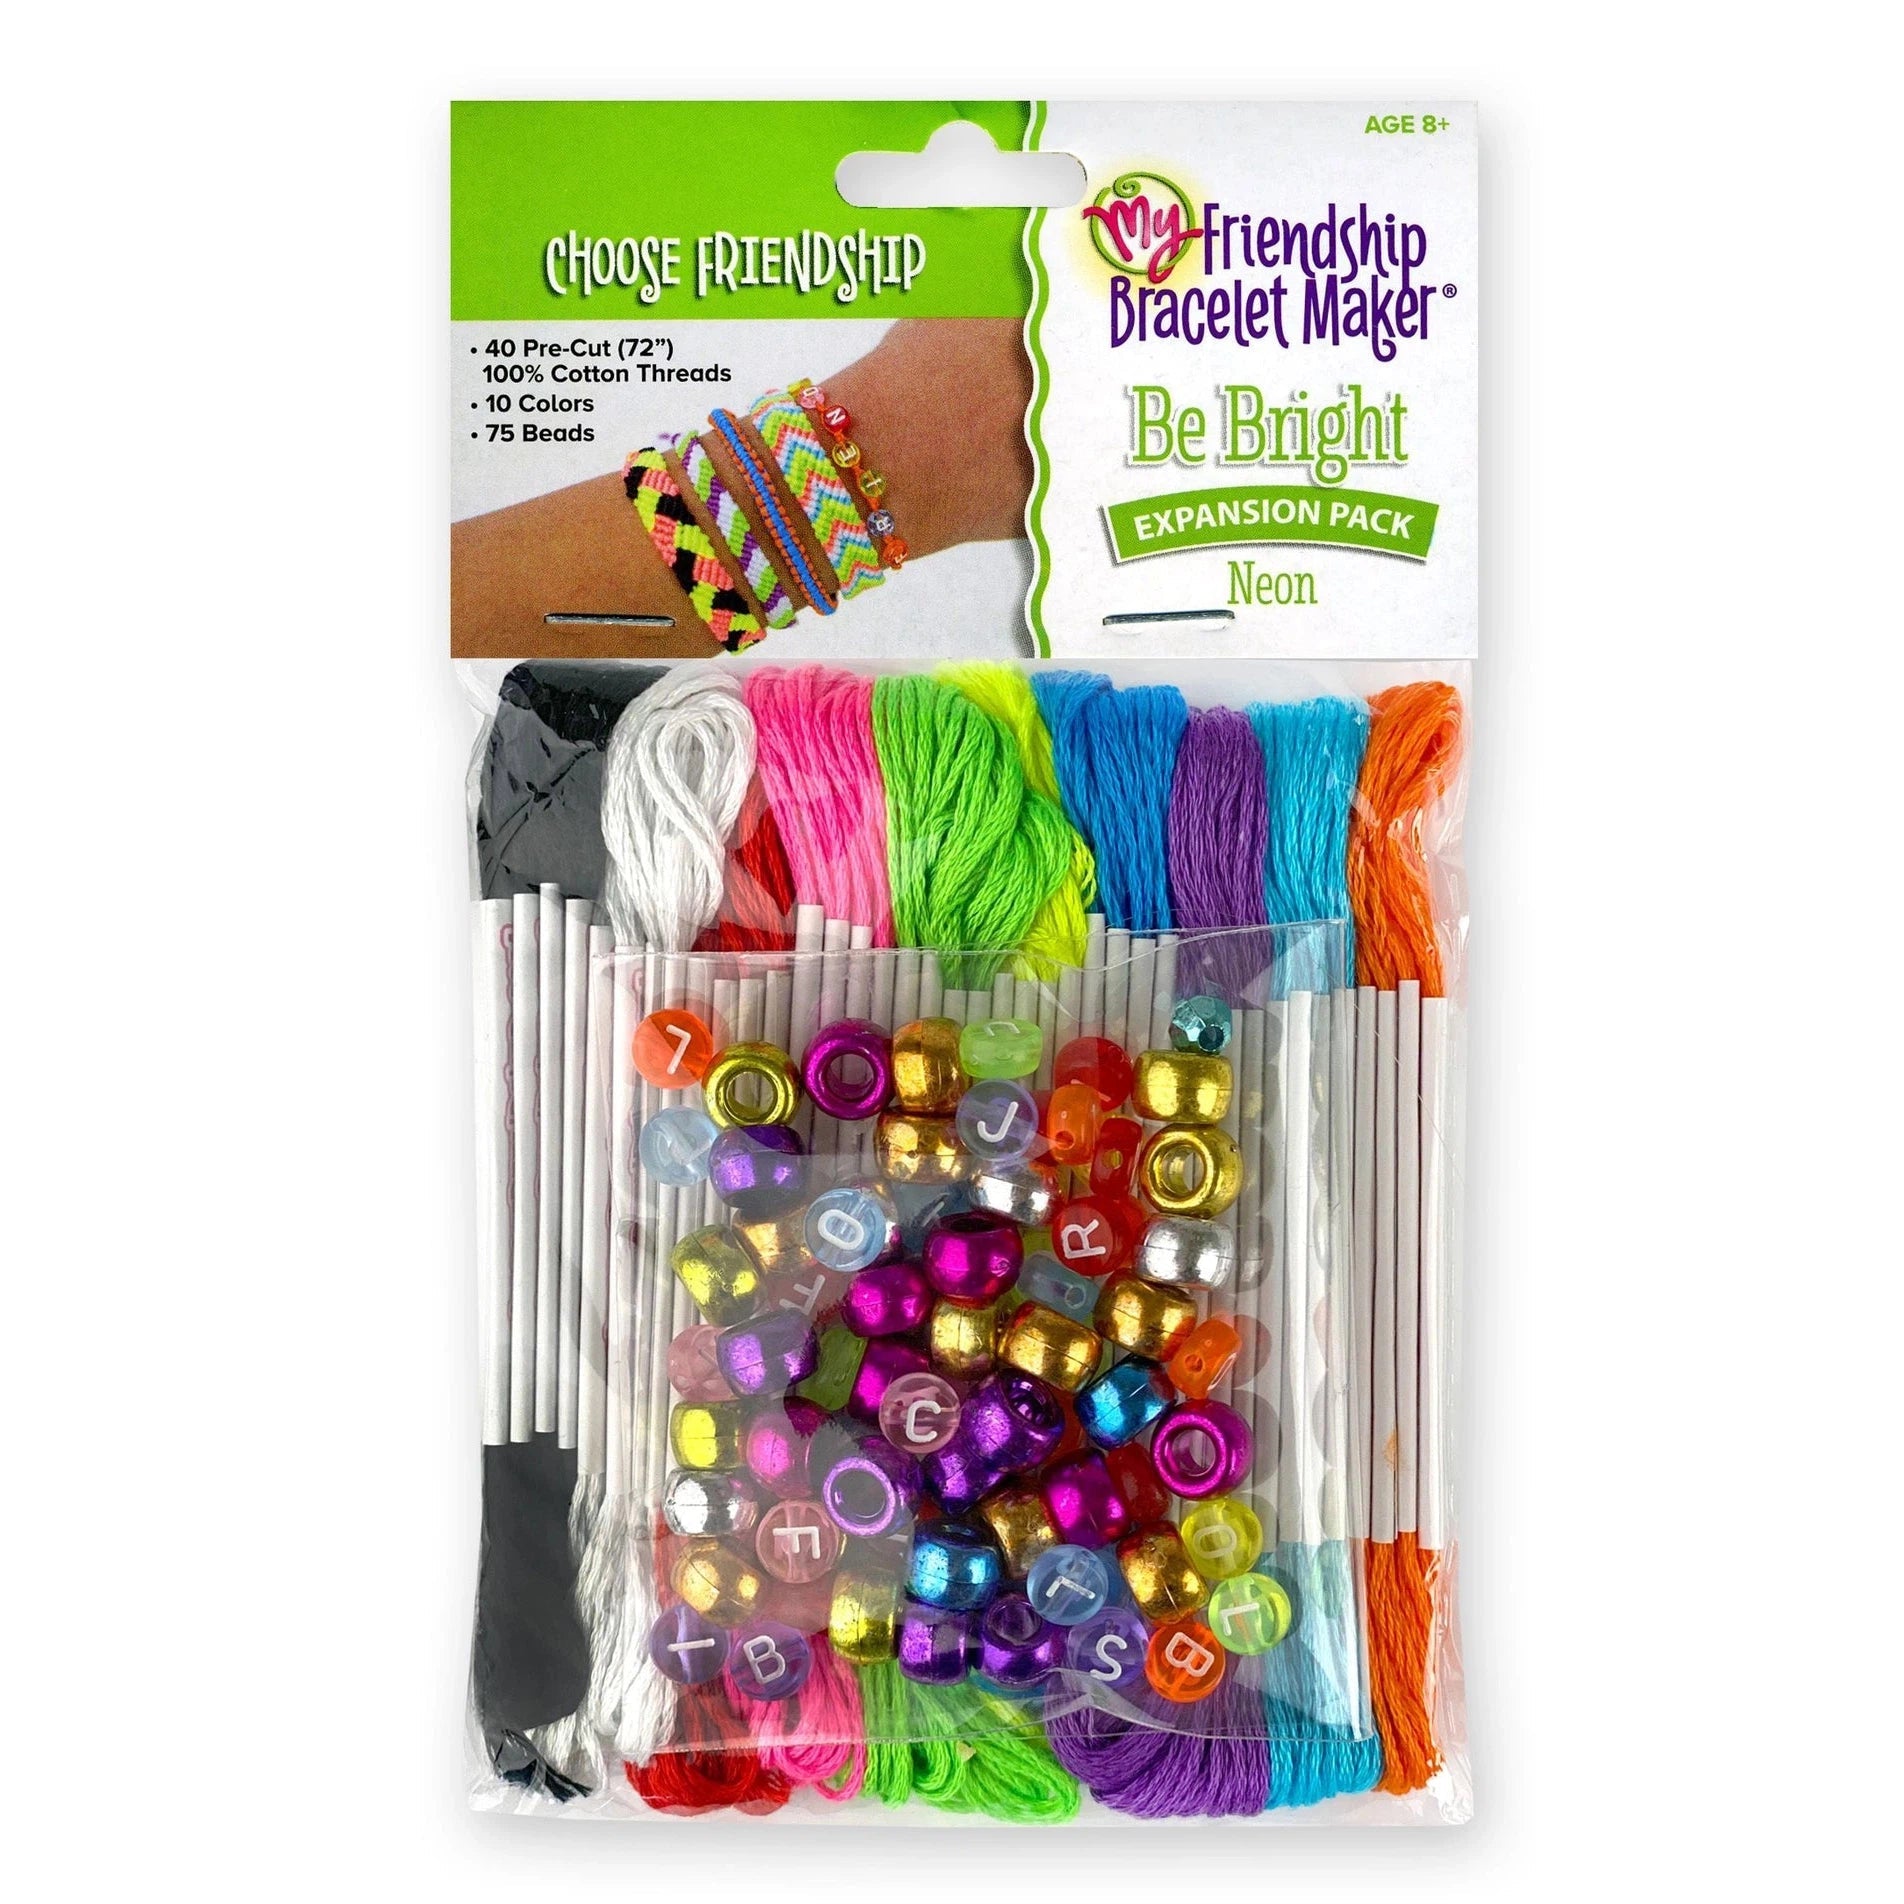 Choose Friendship My Friendship Bracelet Maker Expansion Pack - Be Bright-CHOOSE FRIENDSHIP-Little Giant Kidz